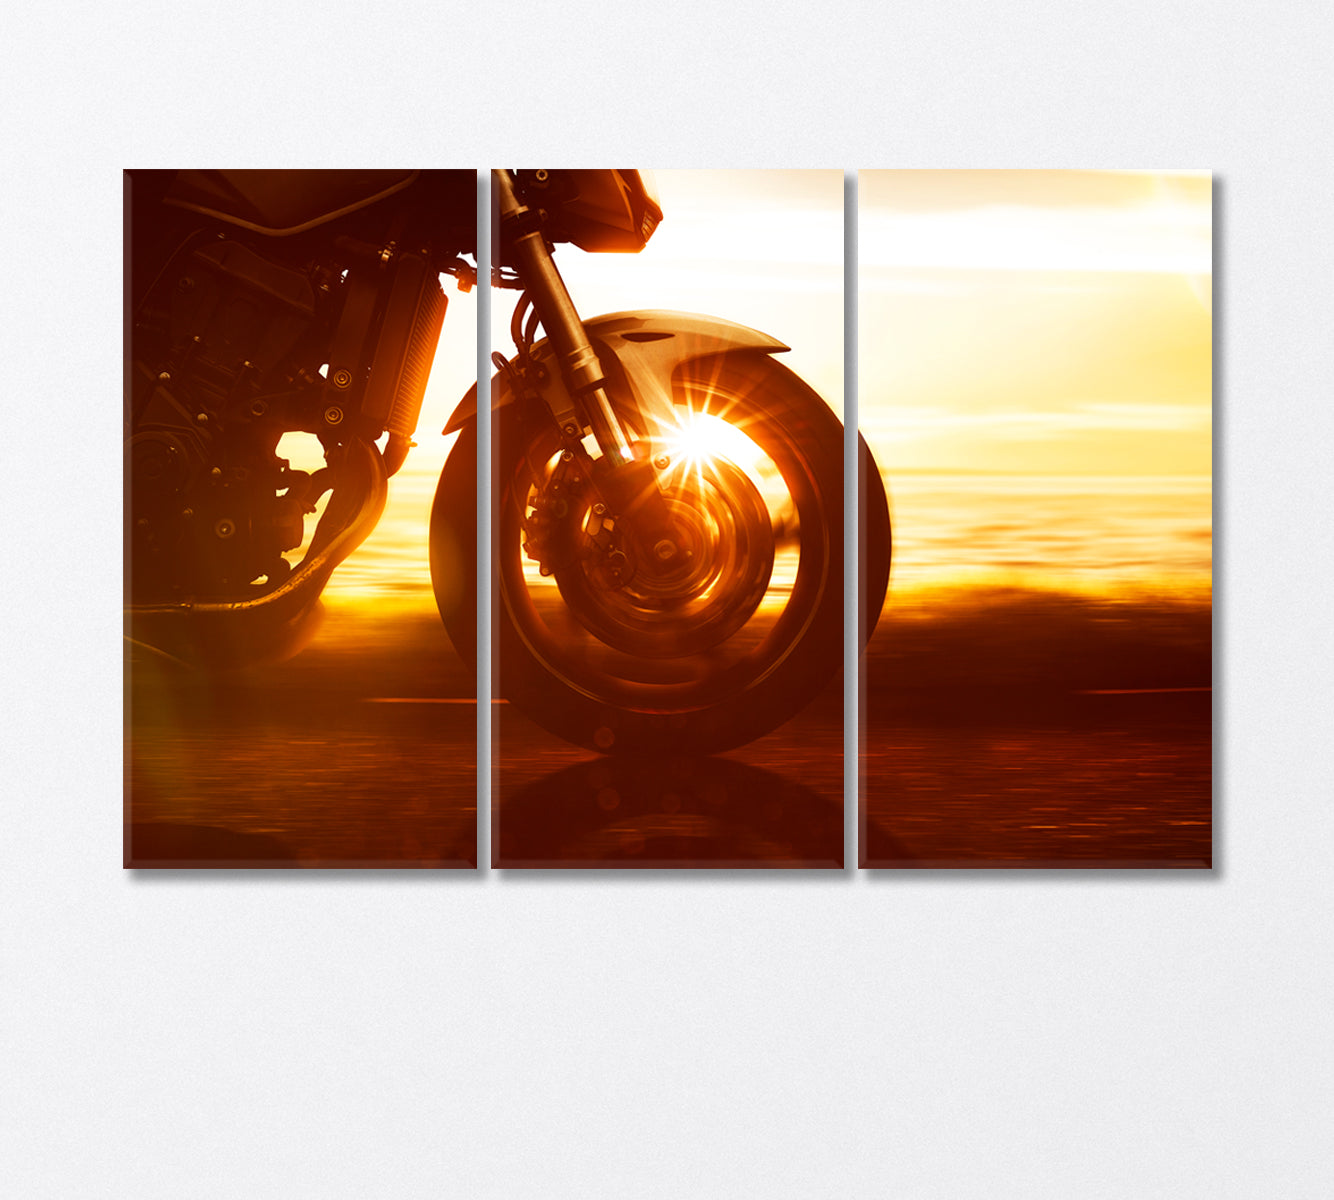 Motorcycle on the Coastal Road at Sunset Canvas Print-Canvas Print-CetArt-3 Panels-36x24 inches-CetArt